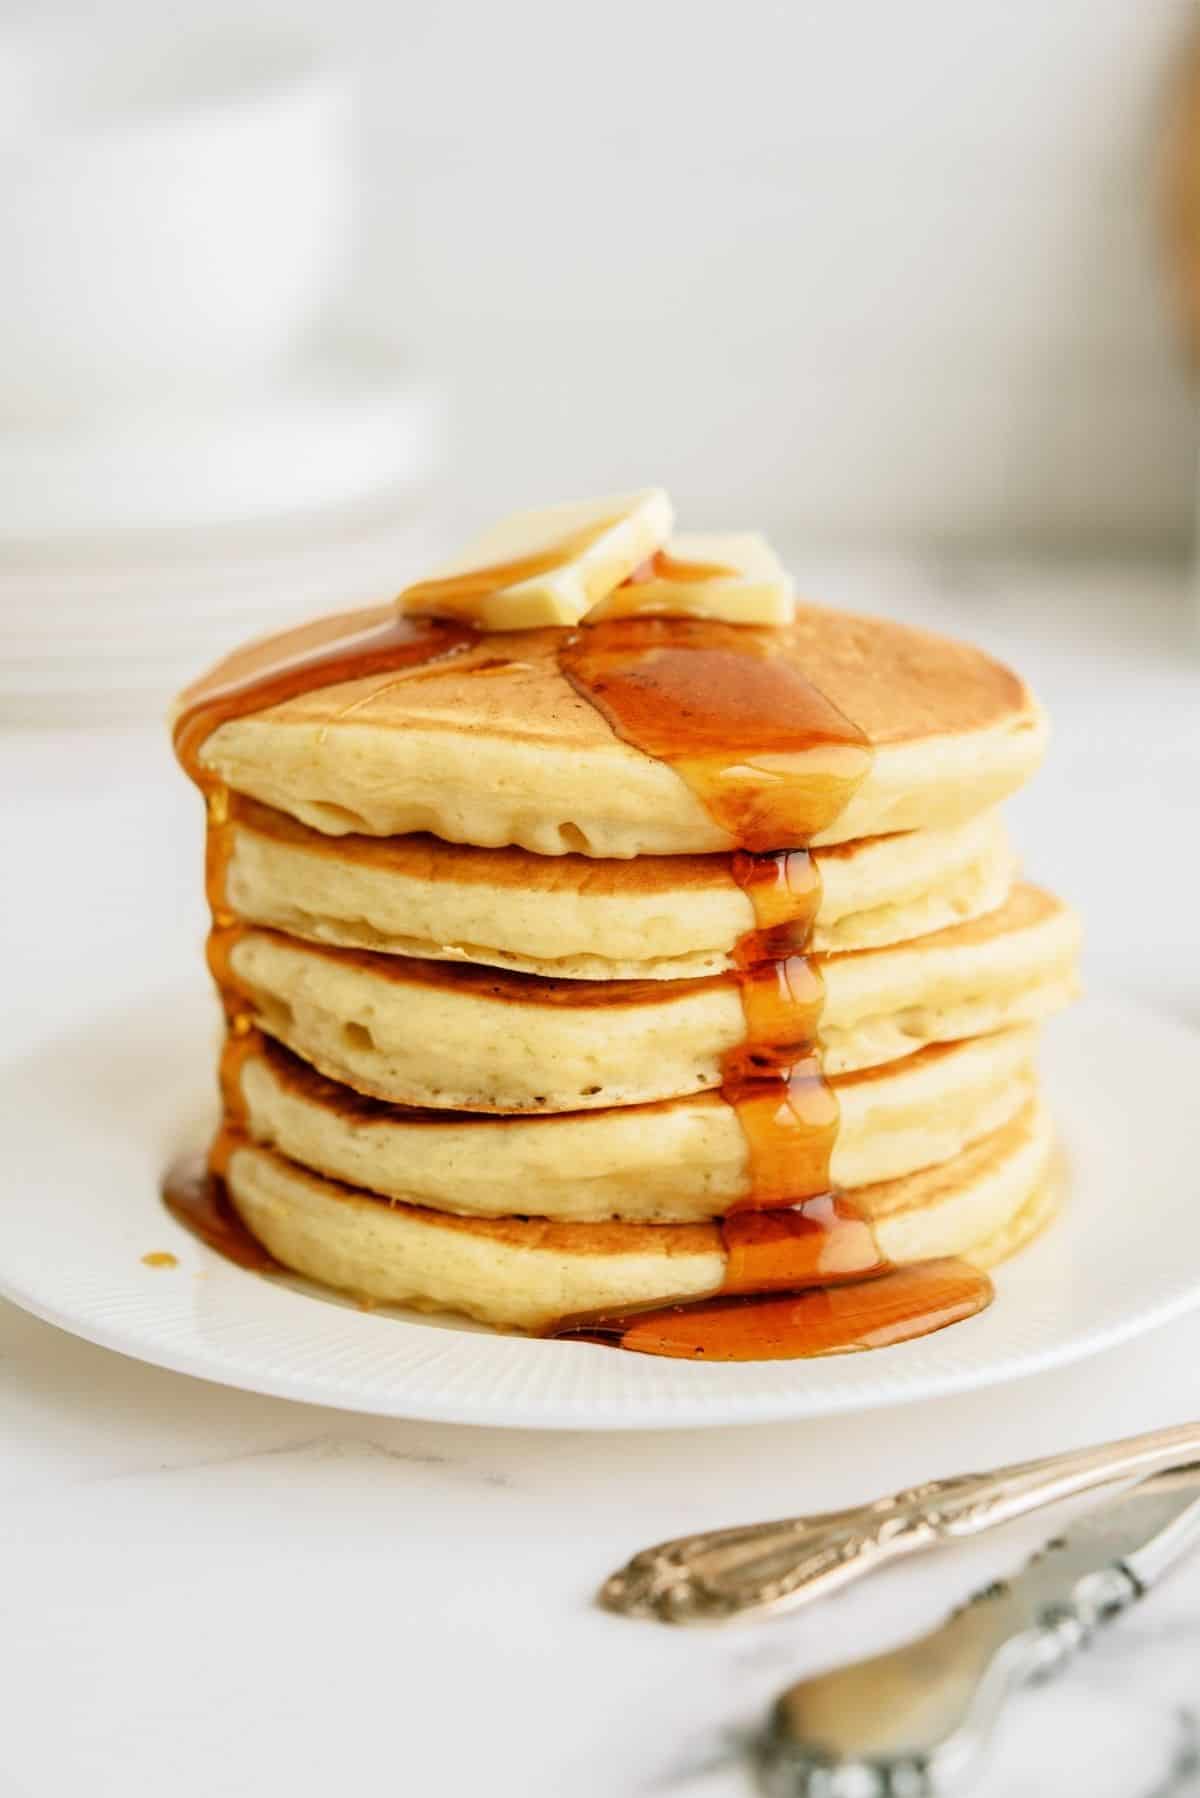 https://www.sixsistersstuff.com/wp-content/uploads/2022/05/Cracker-Barrel-Buttermilk-Pancakes-Copycat-Recipe.jpg